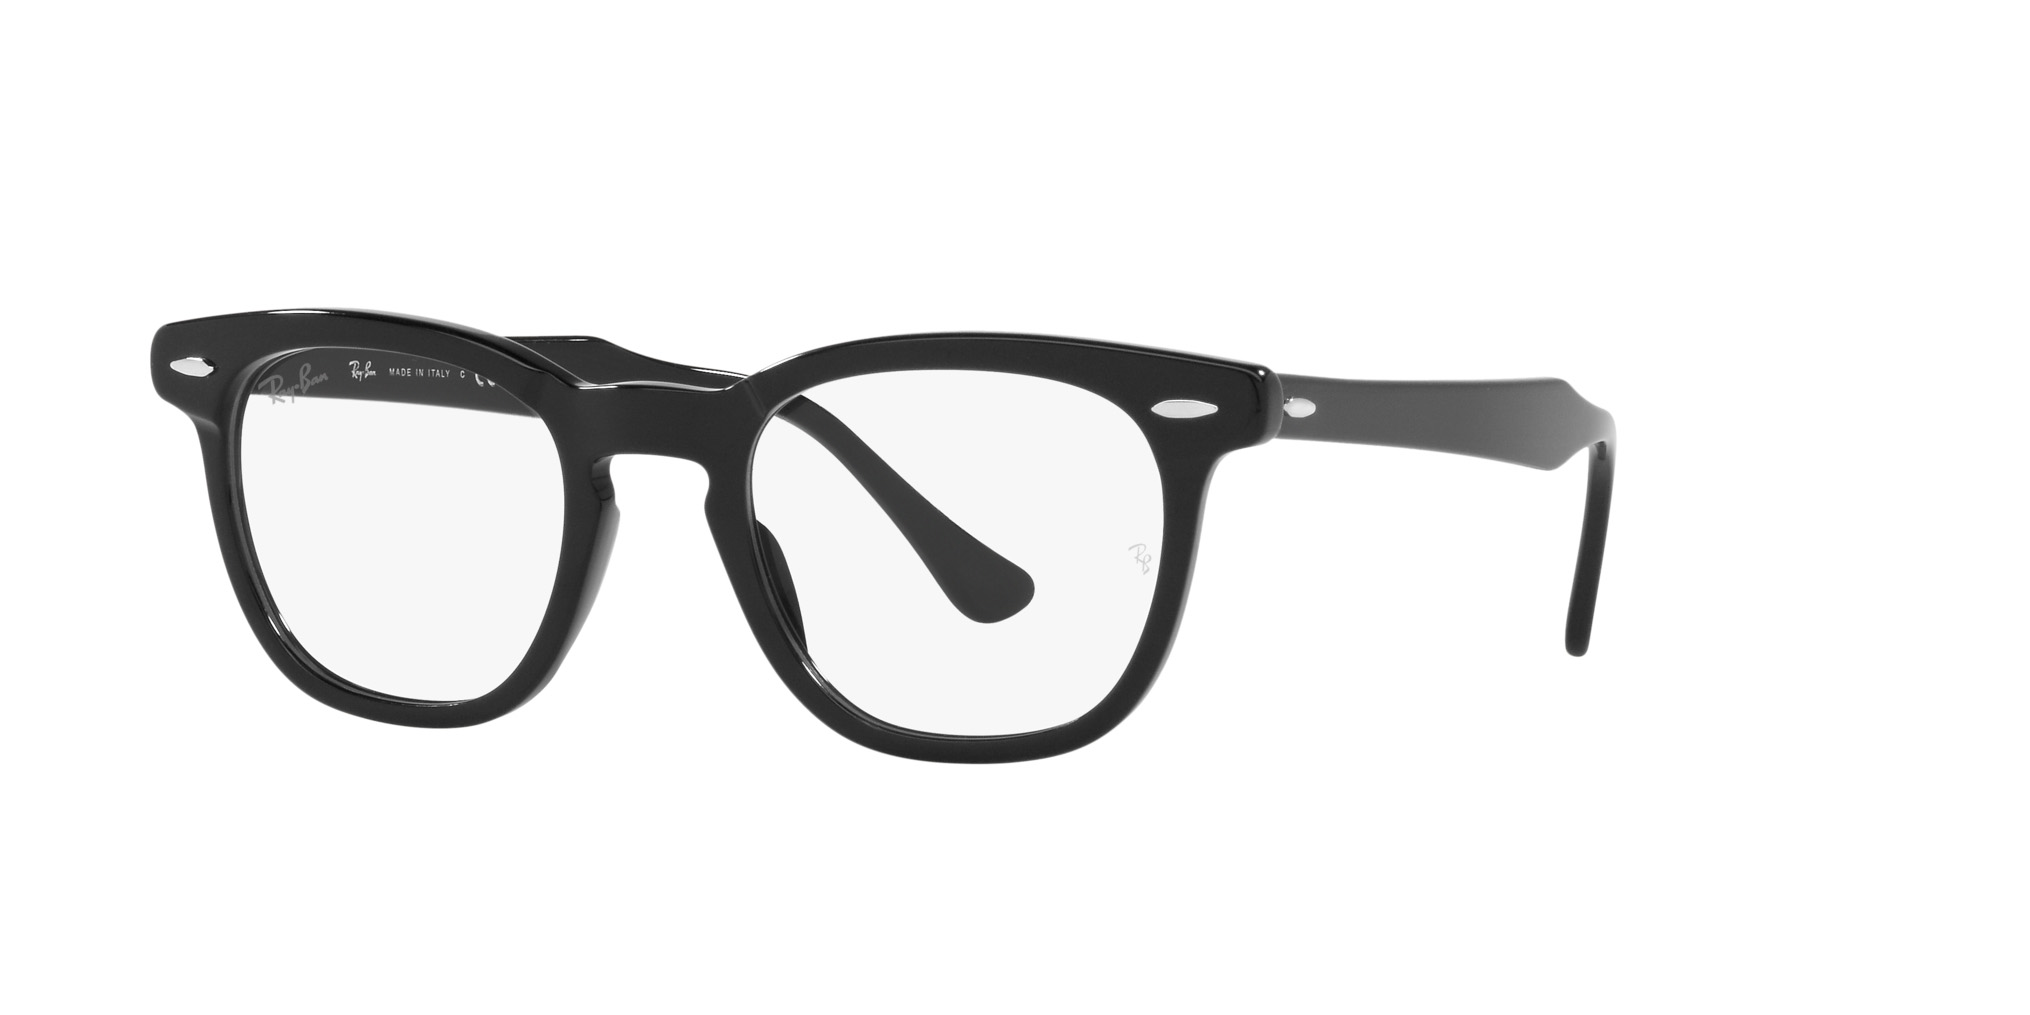 Buy Ray-Ban Hawkeye Eyeglasses Online.